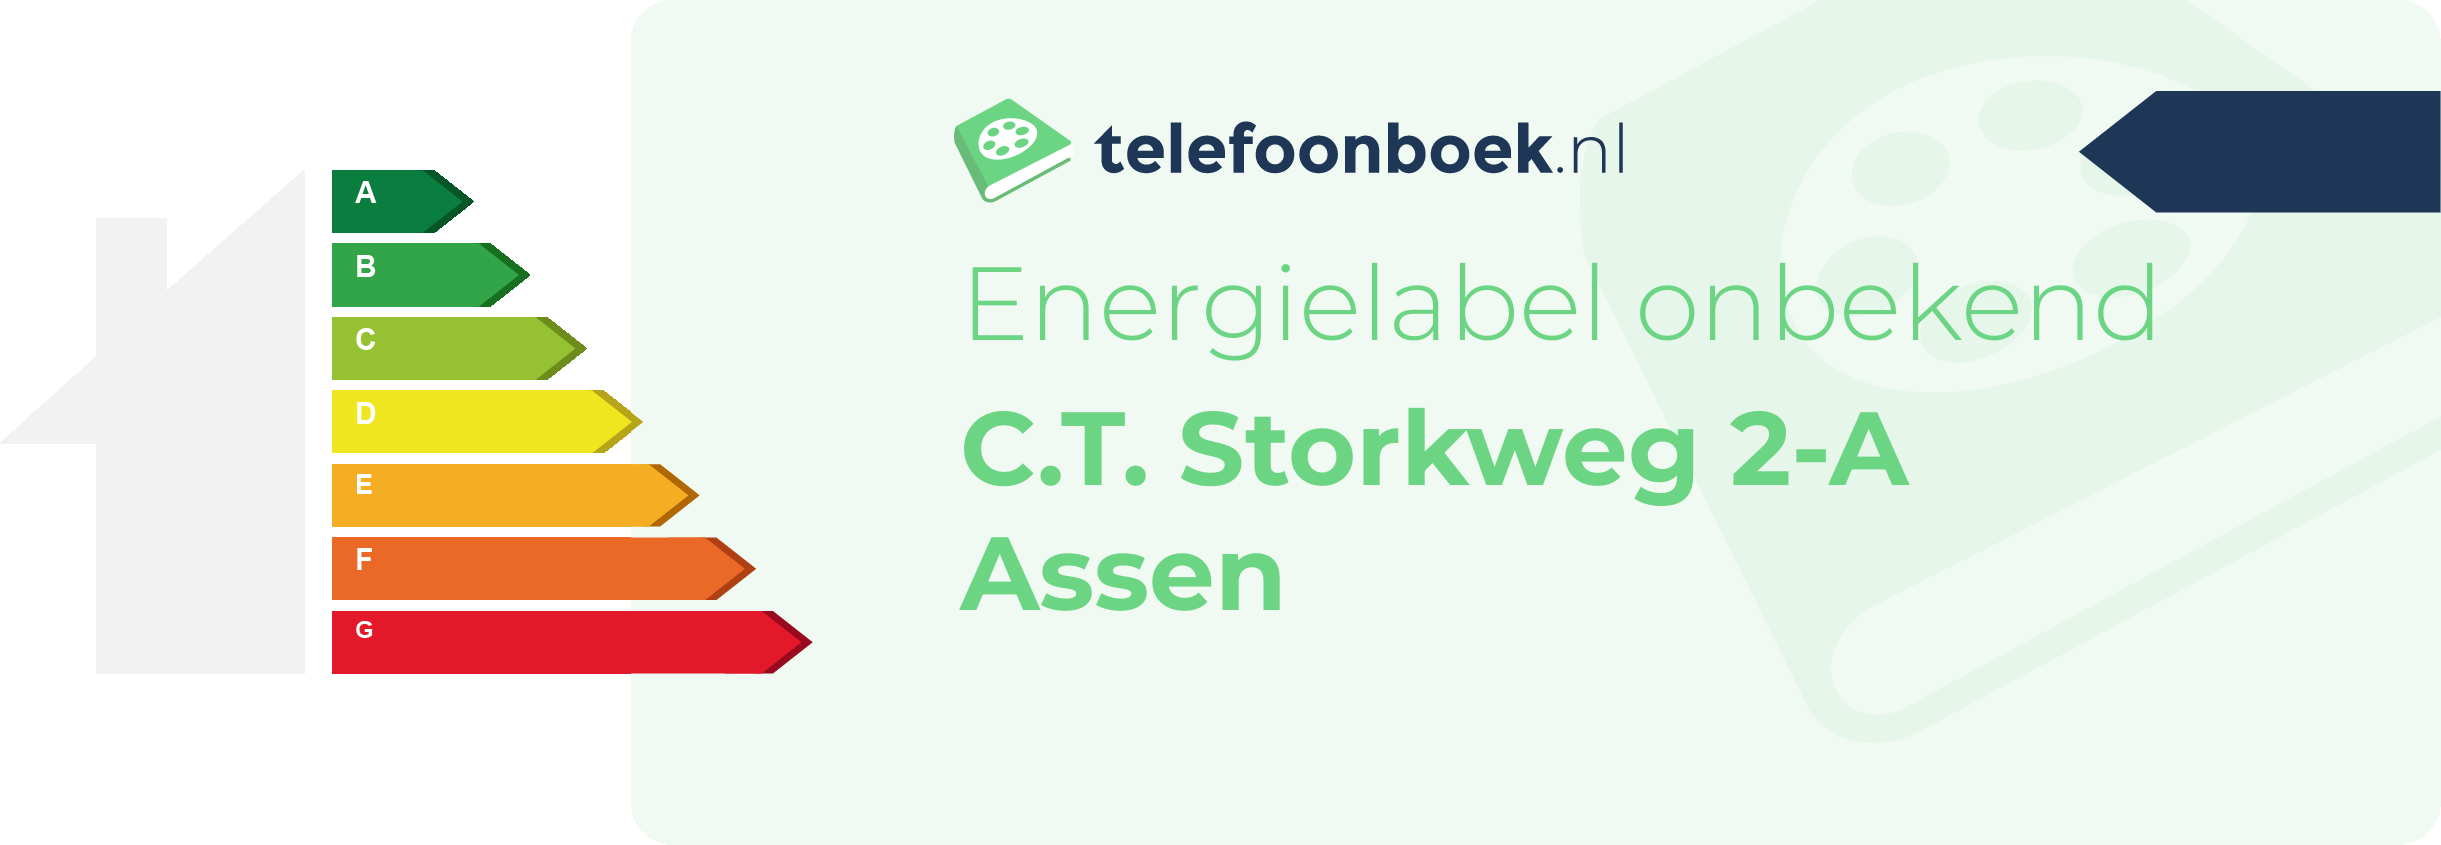 Energielabel C.T. Storkweg 2-A Assen